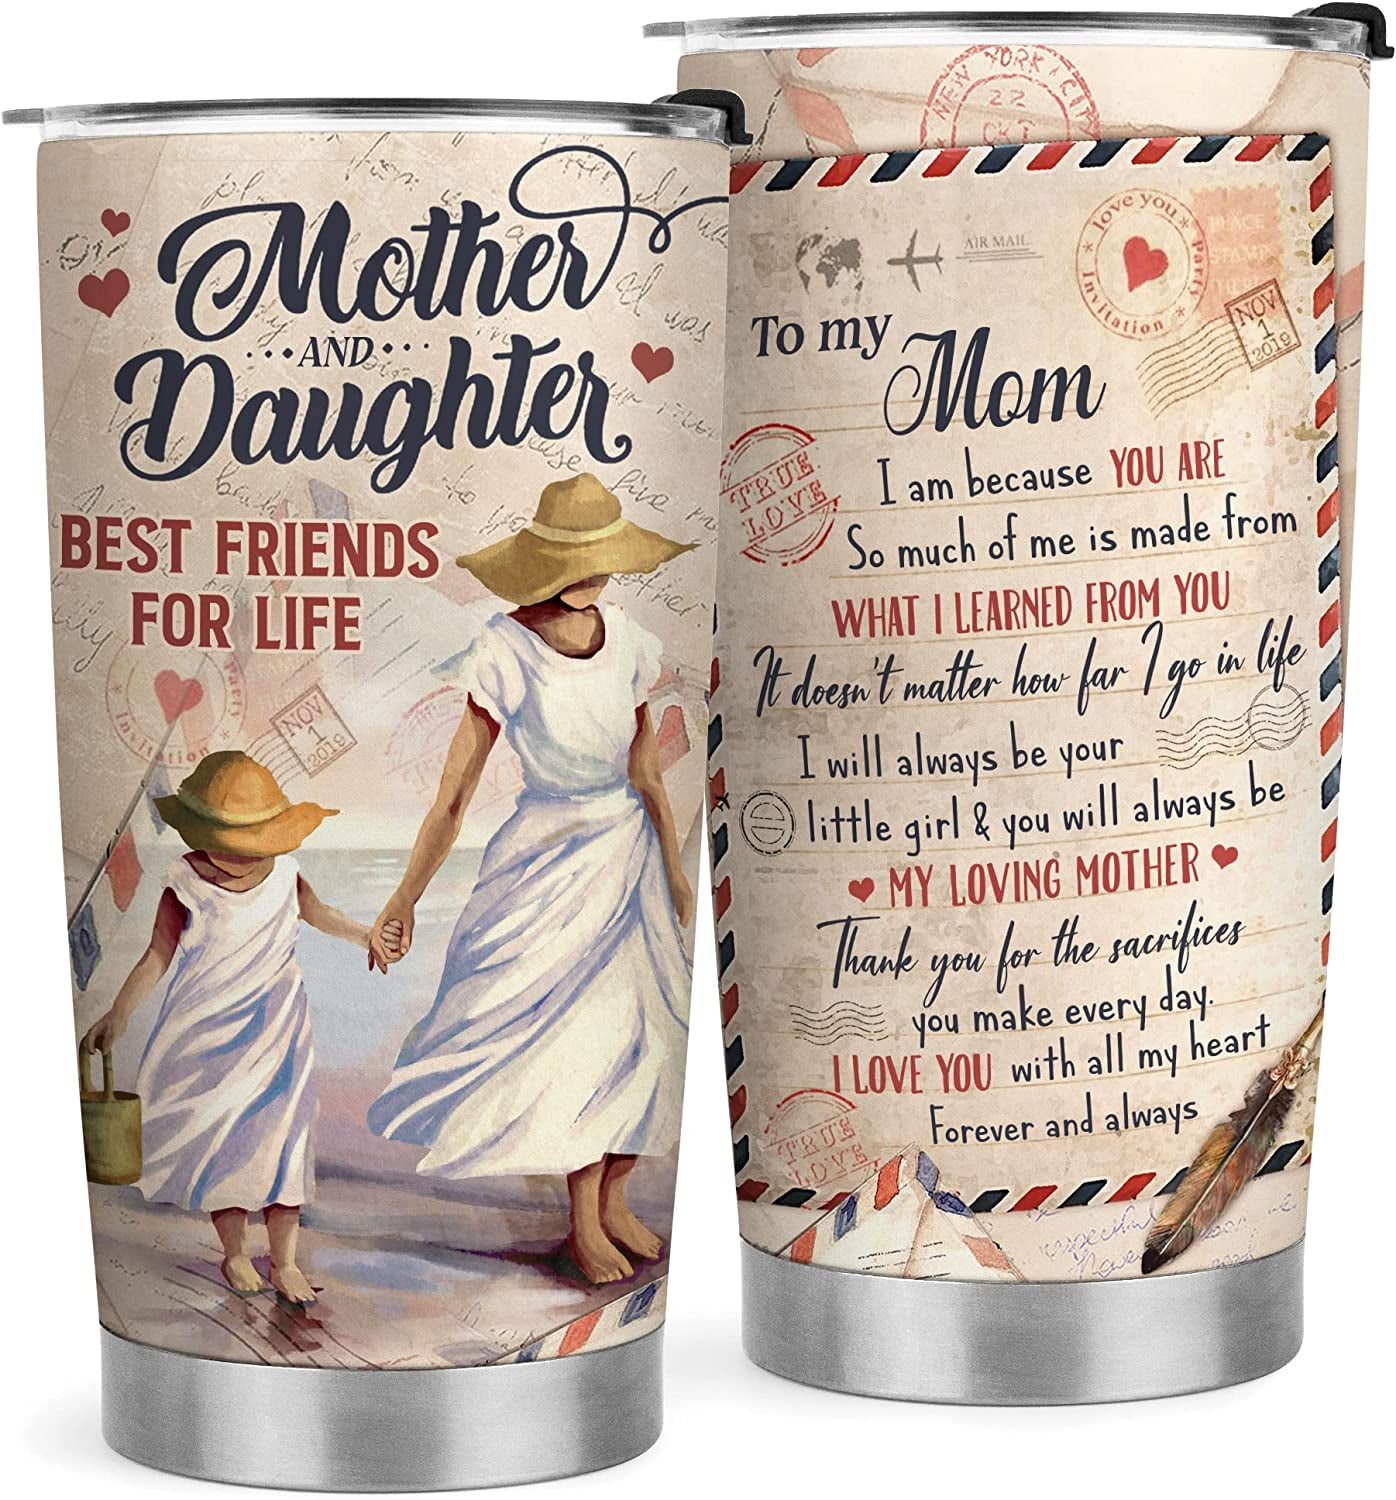 KLUBI Mom Birthday Gifts Funny - Mom No Matter What/Ugly Children 20oz  Travel Mug/Tumbler for Coffee…See more KLUBI Mom Birthday Gifts Funny - Mom  No